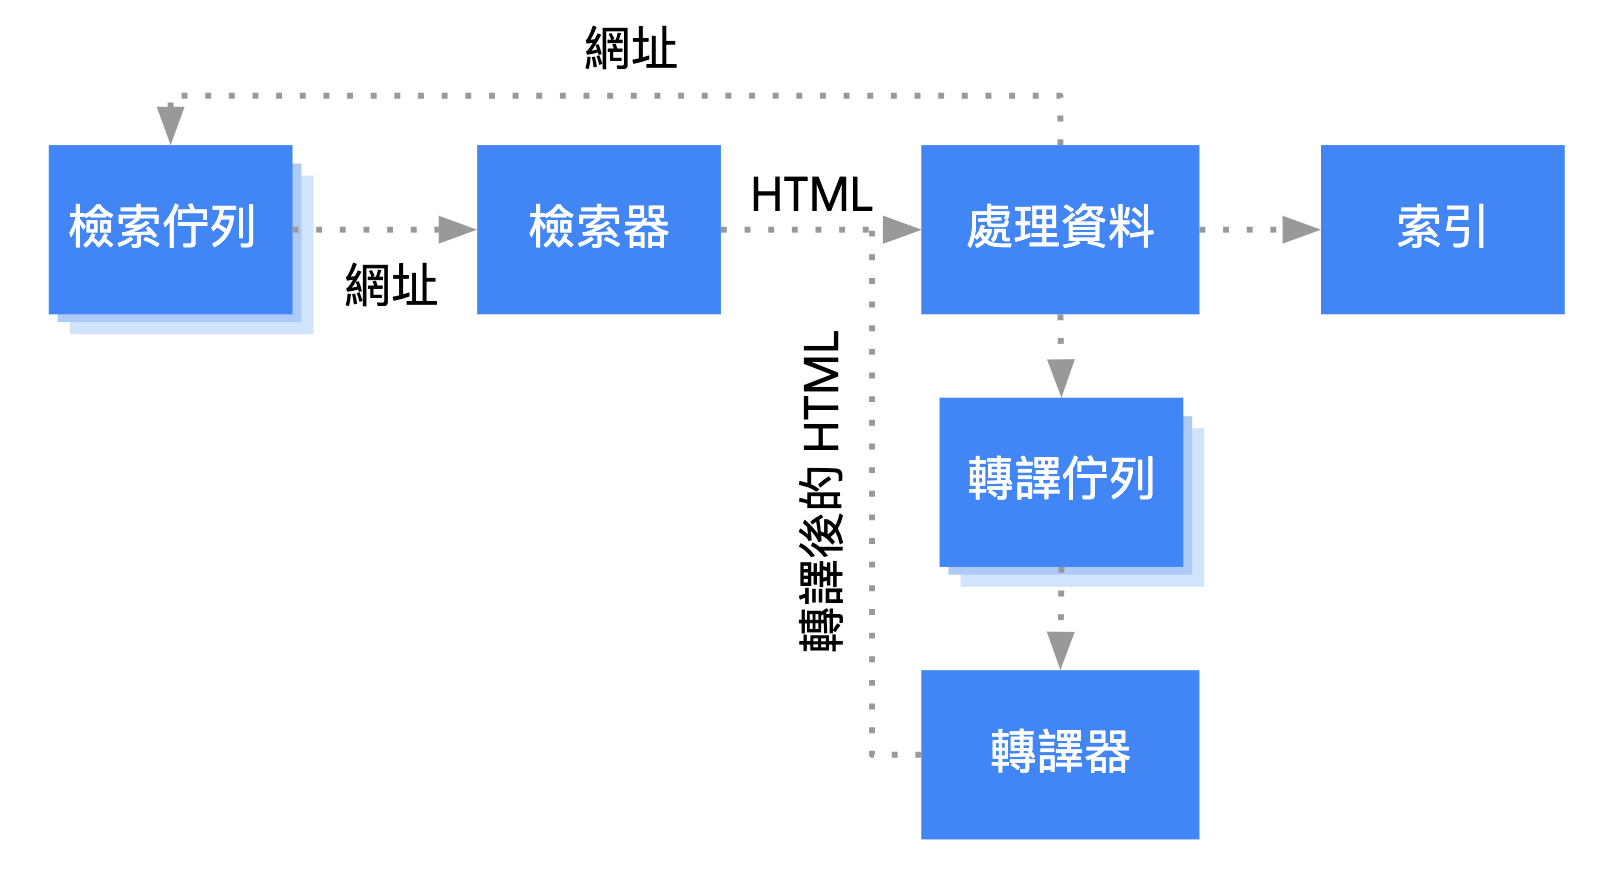 Googlebot 會從檢索佇列中擷取網址並加以檢索，然後將網址傳送至處理階段。處理階段會擷取重新回到檢索佇列的連結，並將網頁排入轉譯佇列。網頁會從轉譯佇列傳送至轉譯器，轉譯器會將經過轉譯的 HTML 傳回處理階段，而處理階段則會建立內容索引並擷取要排入檢索佇列的連結。